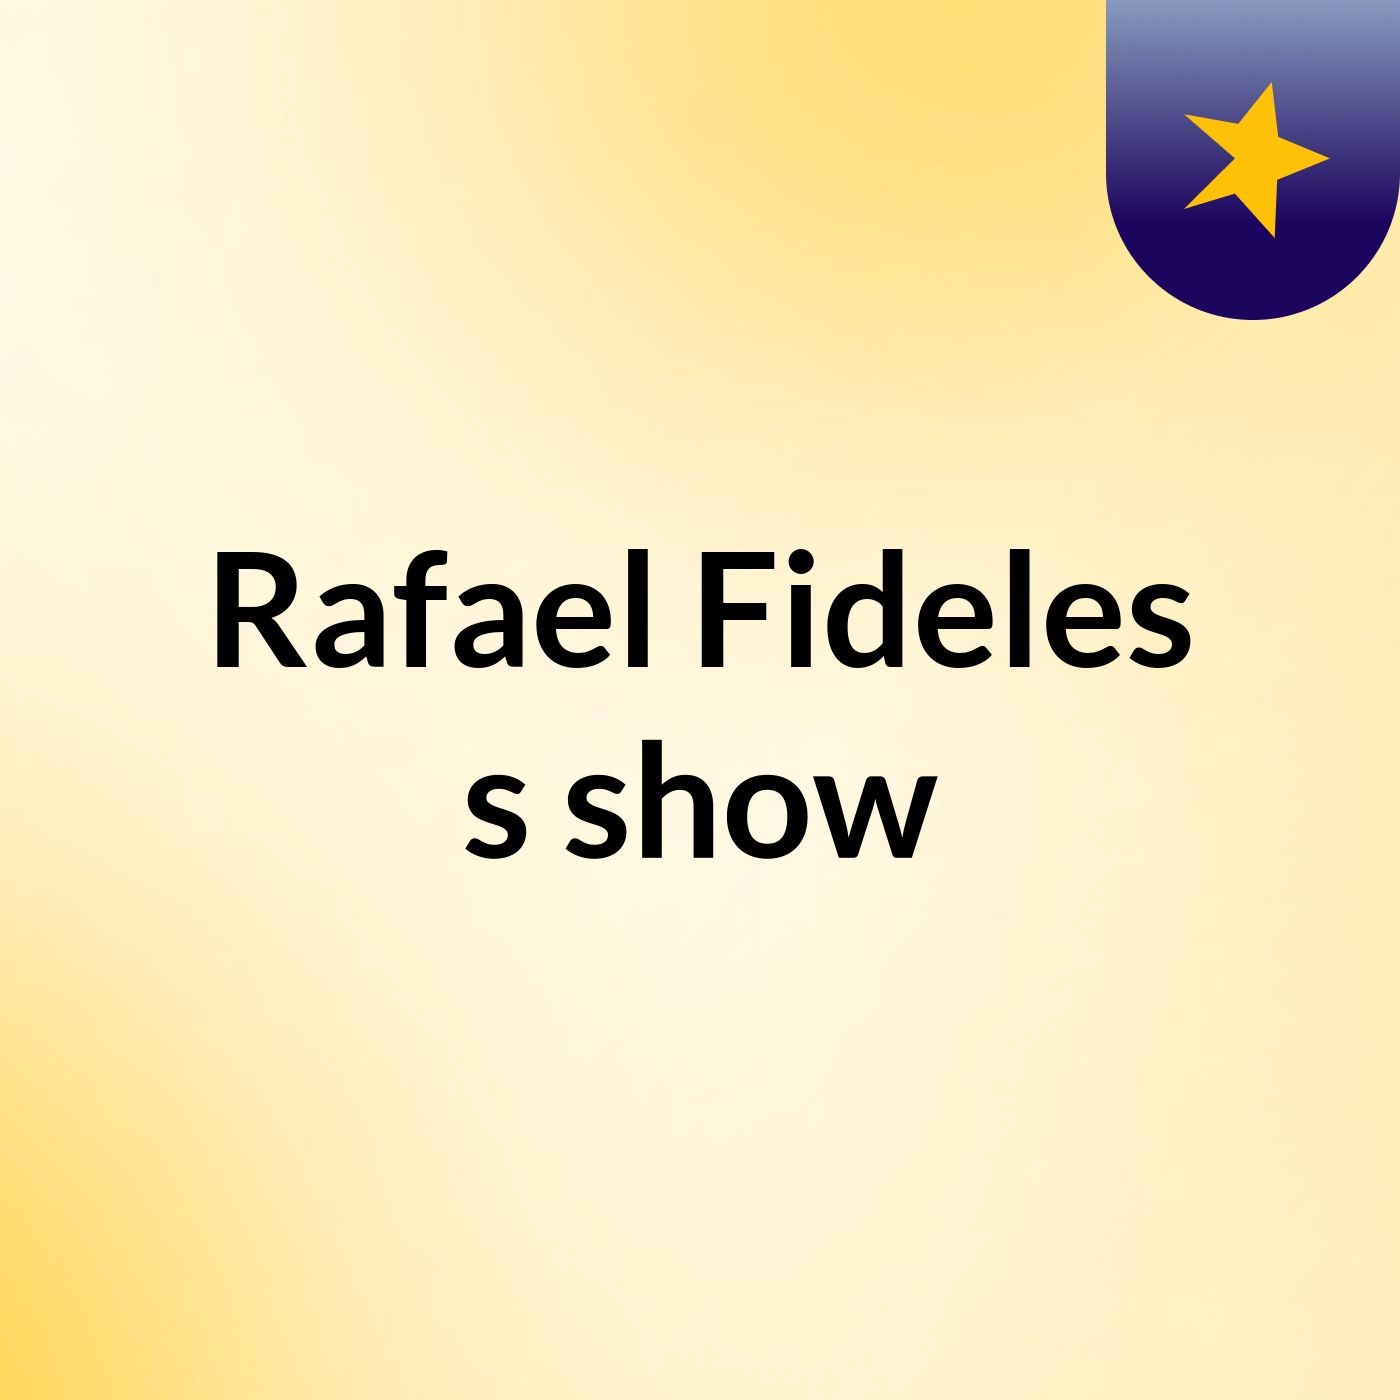 Rafael Fideles's show